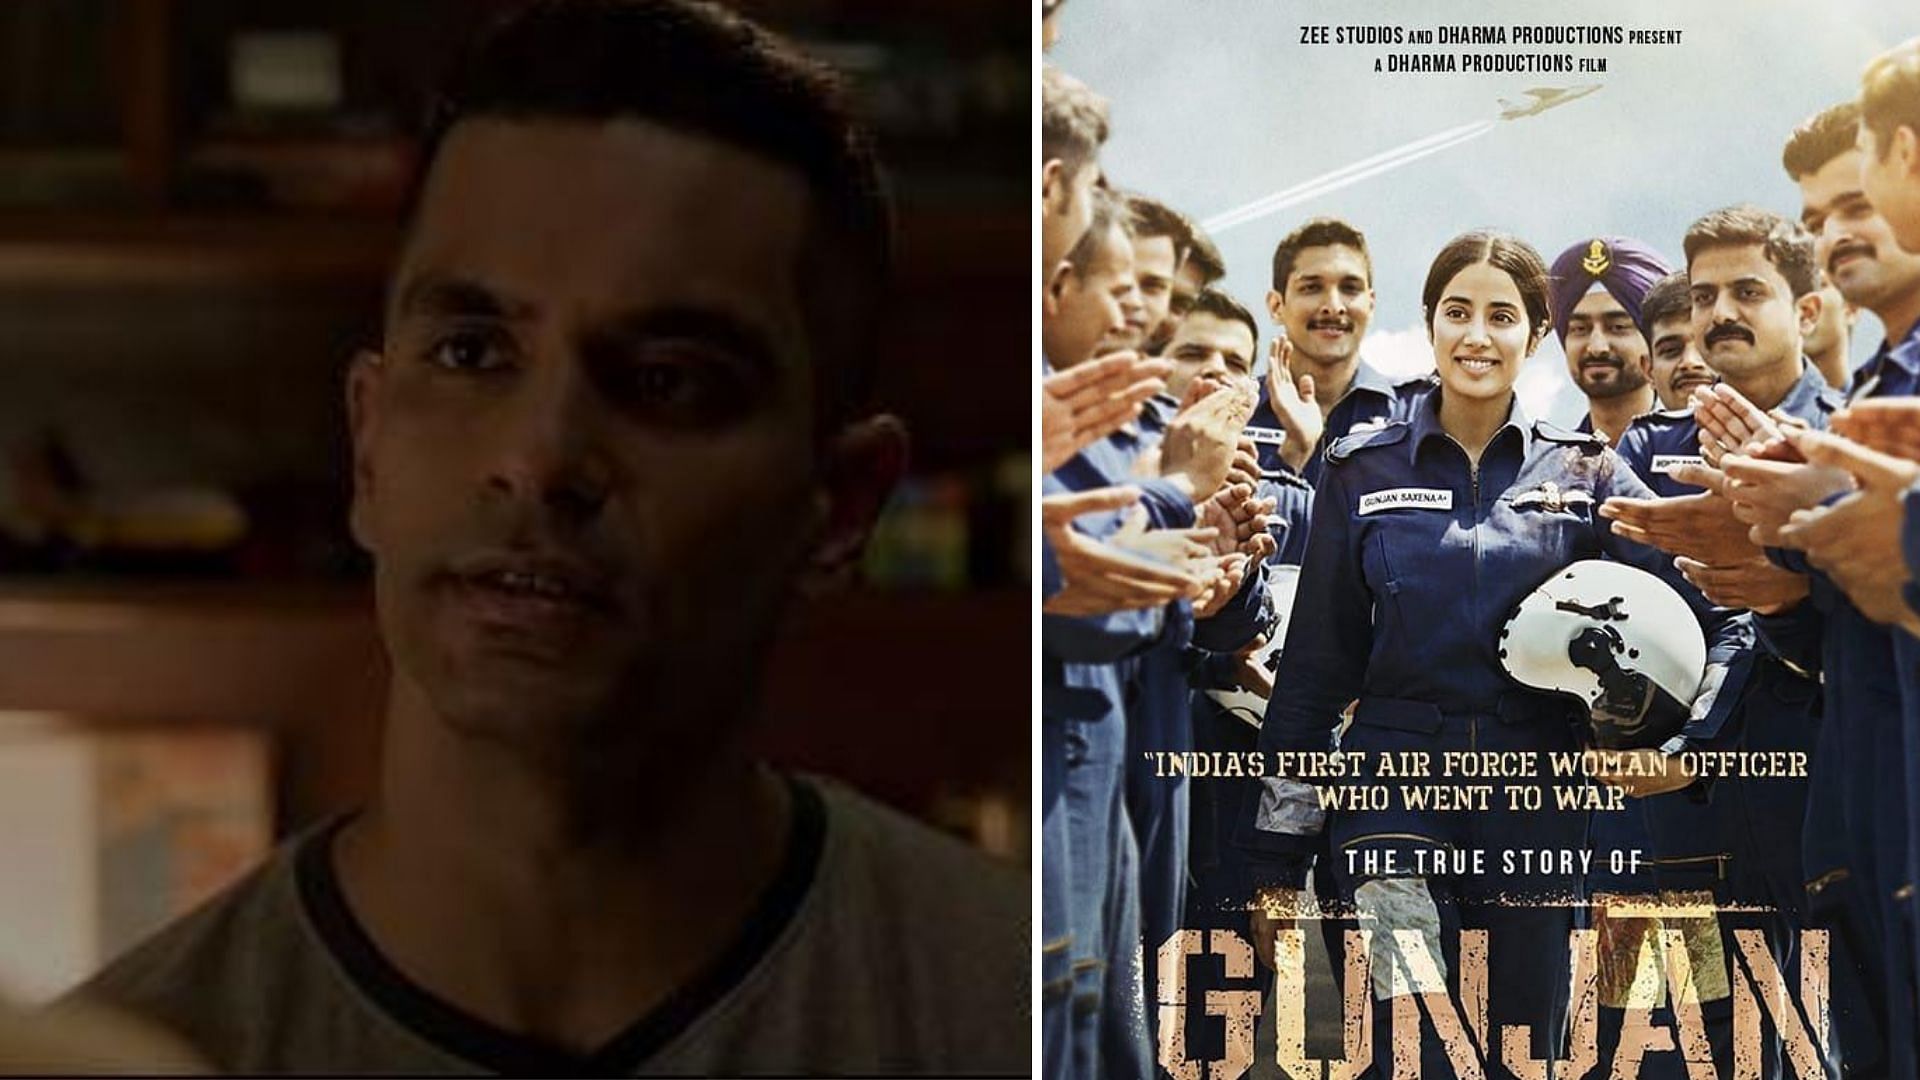 Angad Bedi plays Gunjan Saxena's brother in the film.